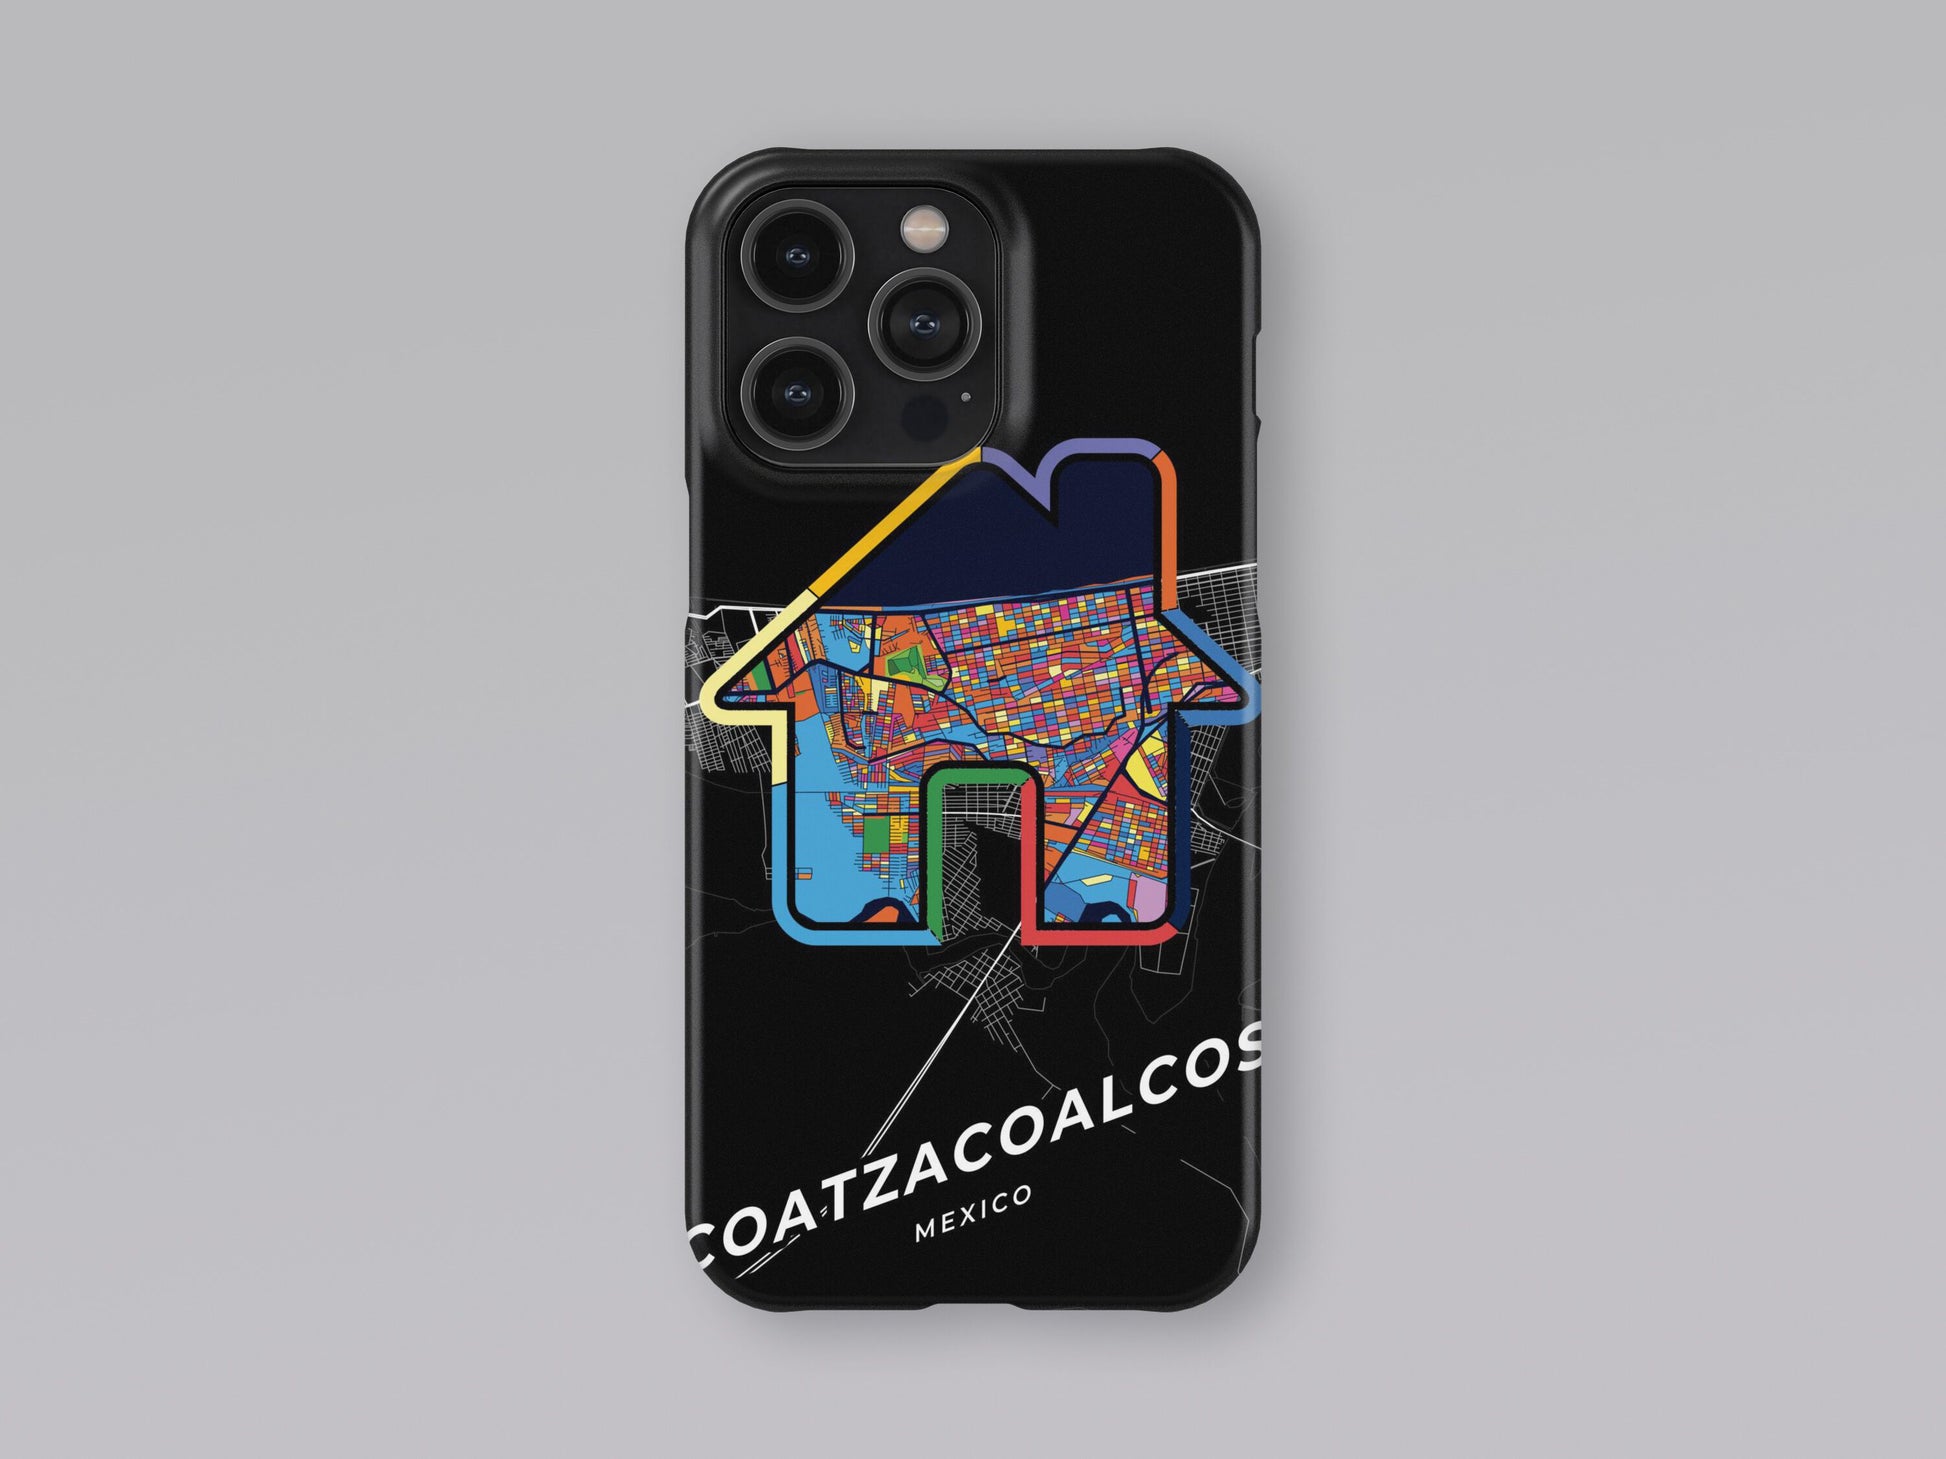 Coatzacoalcos Mexico slim phone case with colorful icon. Birthday, wedding or housewarming gift. Couple match cases. 3